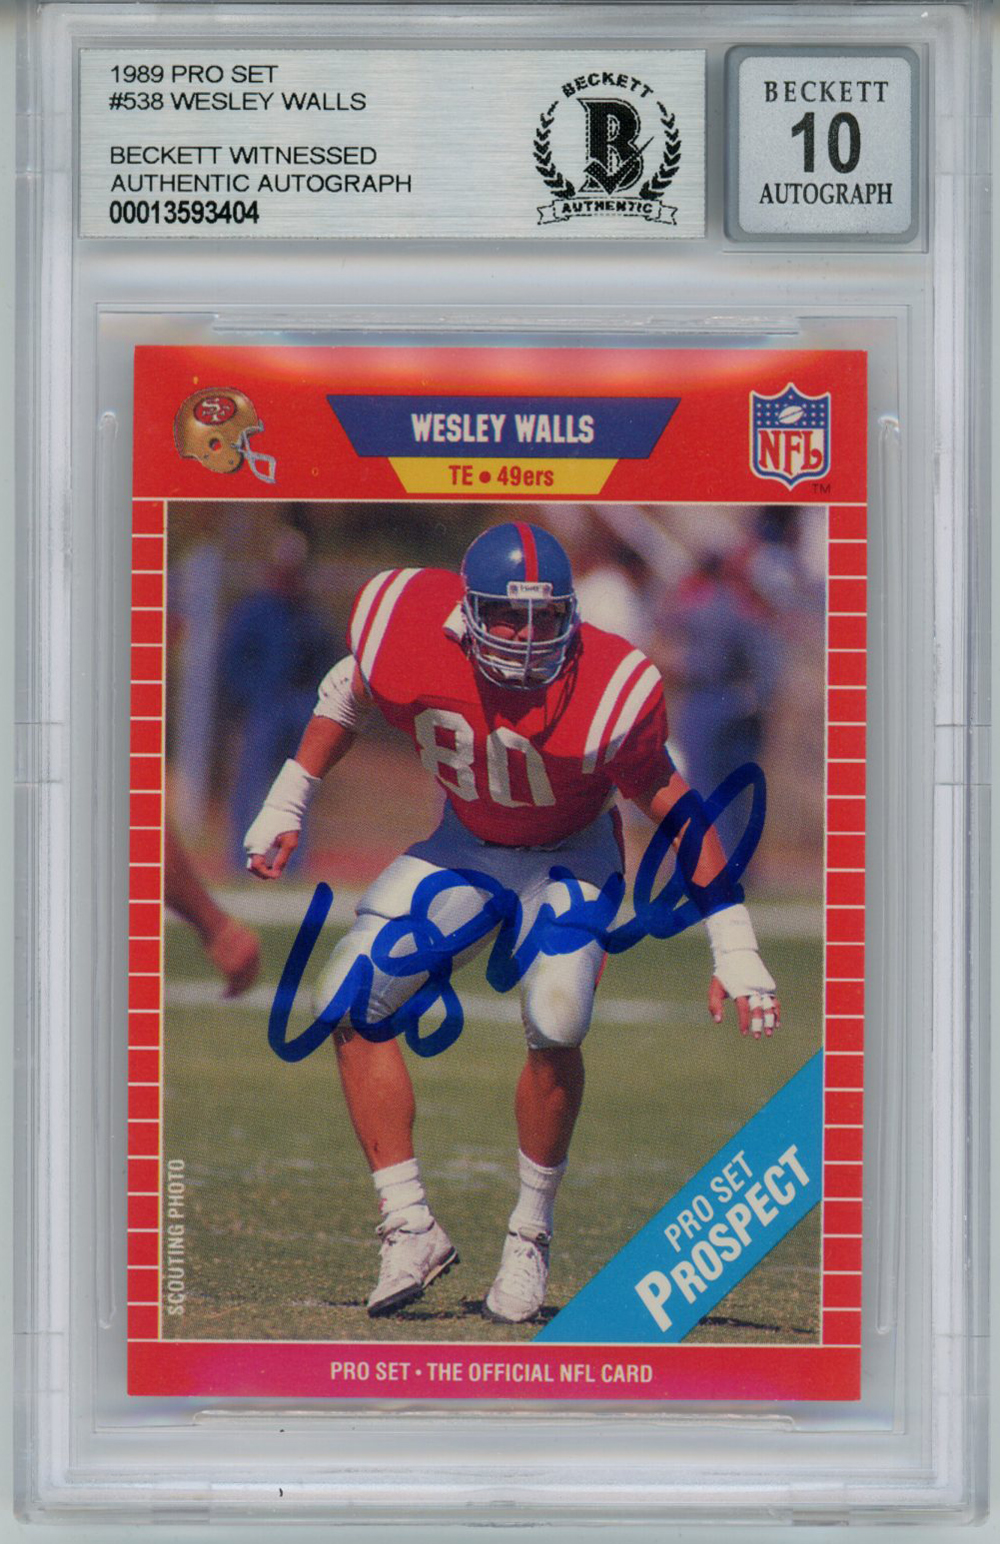 Wesley Walls Autographed/Signed 1989 Pro Set Rookie Card Beckett Slab